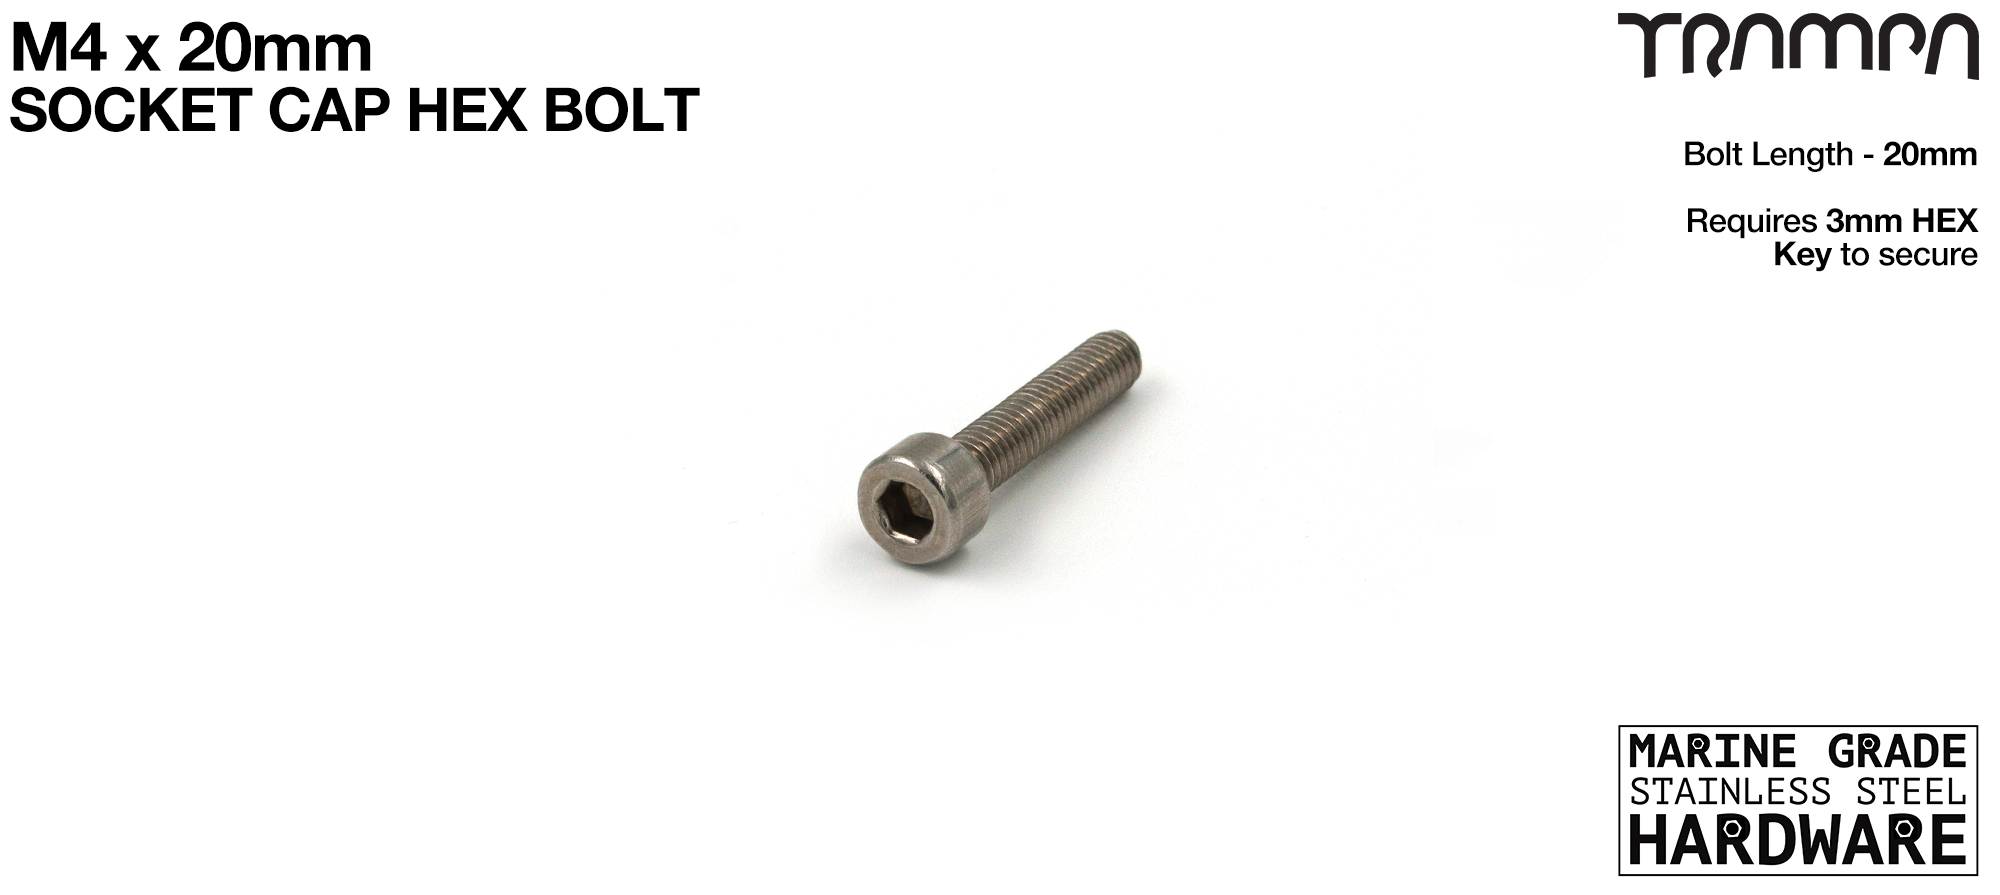 M4 x 20mm Socket Capped Head Allen-Key Bolt ISO 4762 Marine Grade Stainless Steel 